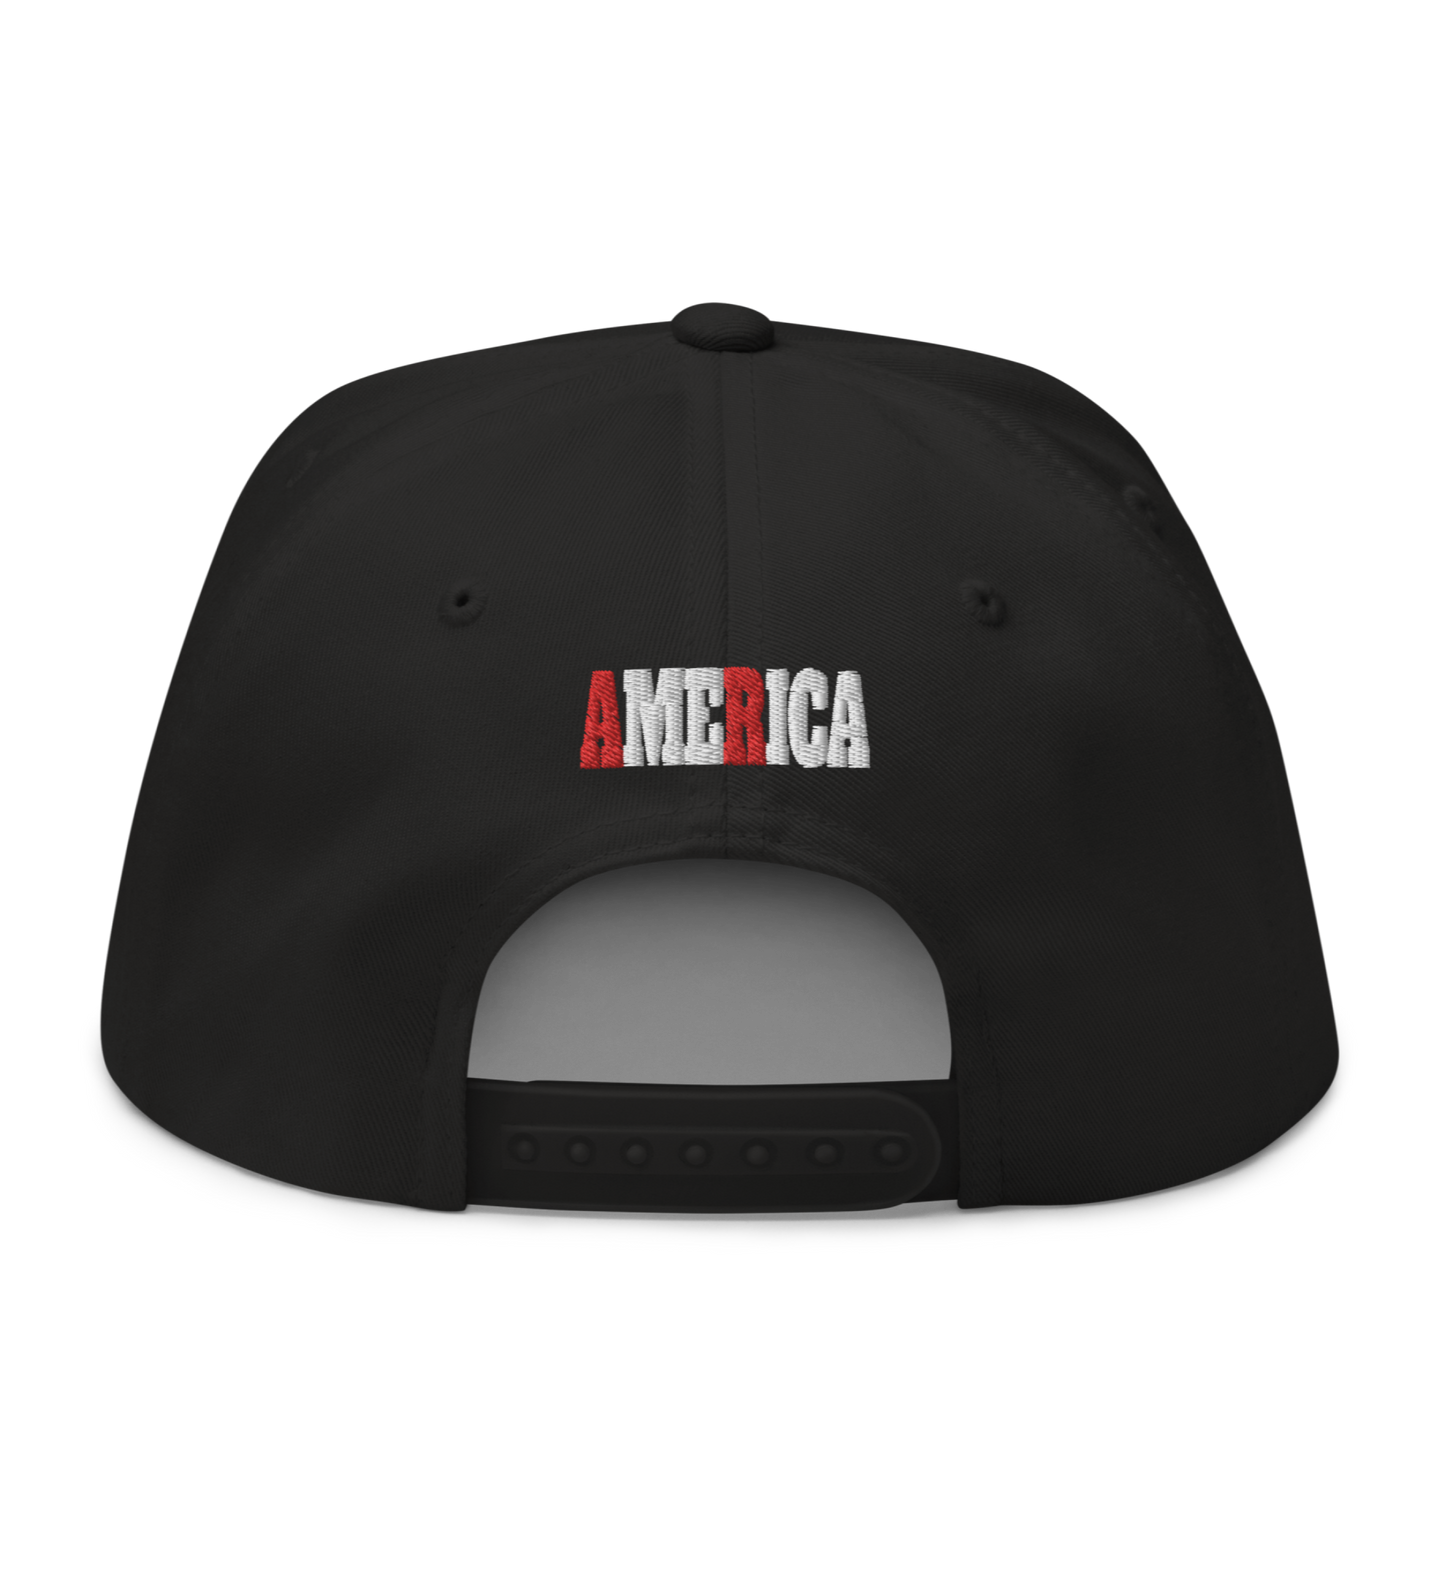 The AR AMERICA Snapback Cap from Asphalt Anarchist Clothing Co. HOT ROD KUSTOM KULTURE APPAREL & PRODUCTS